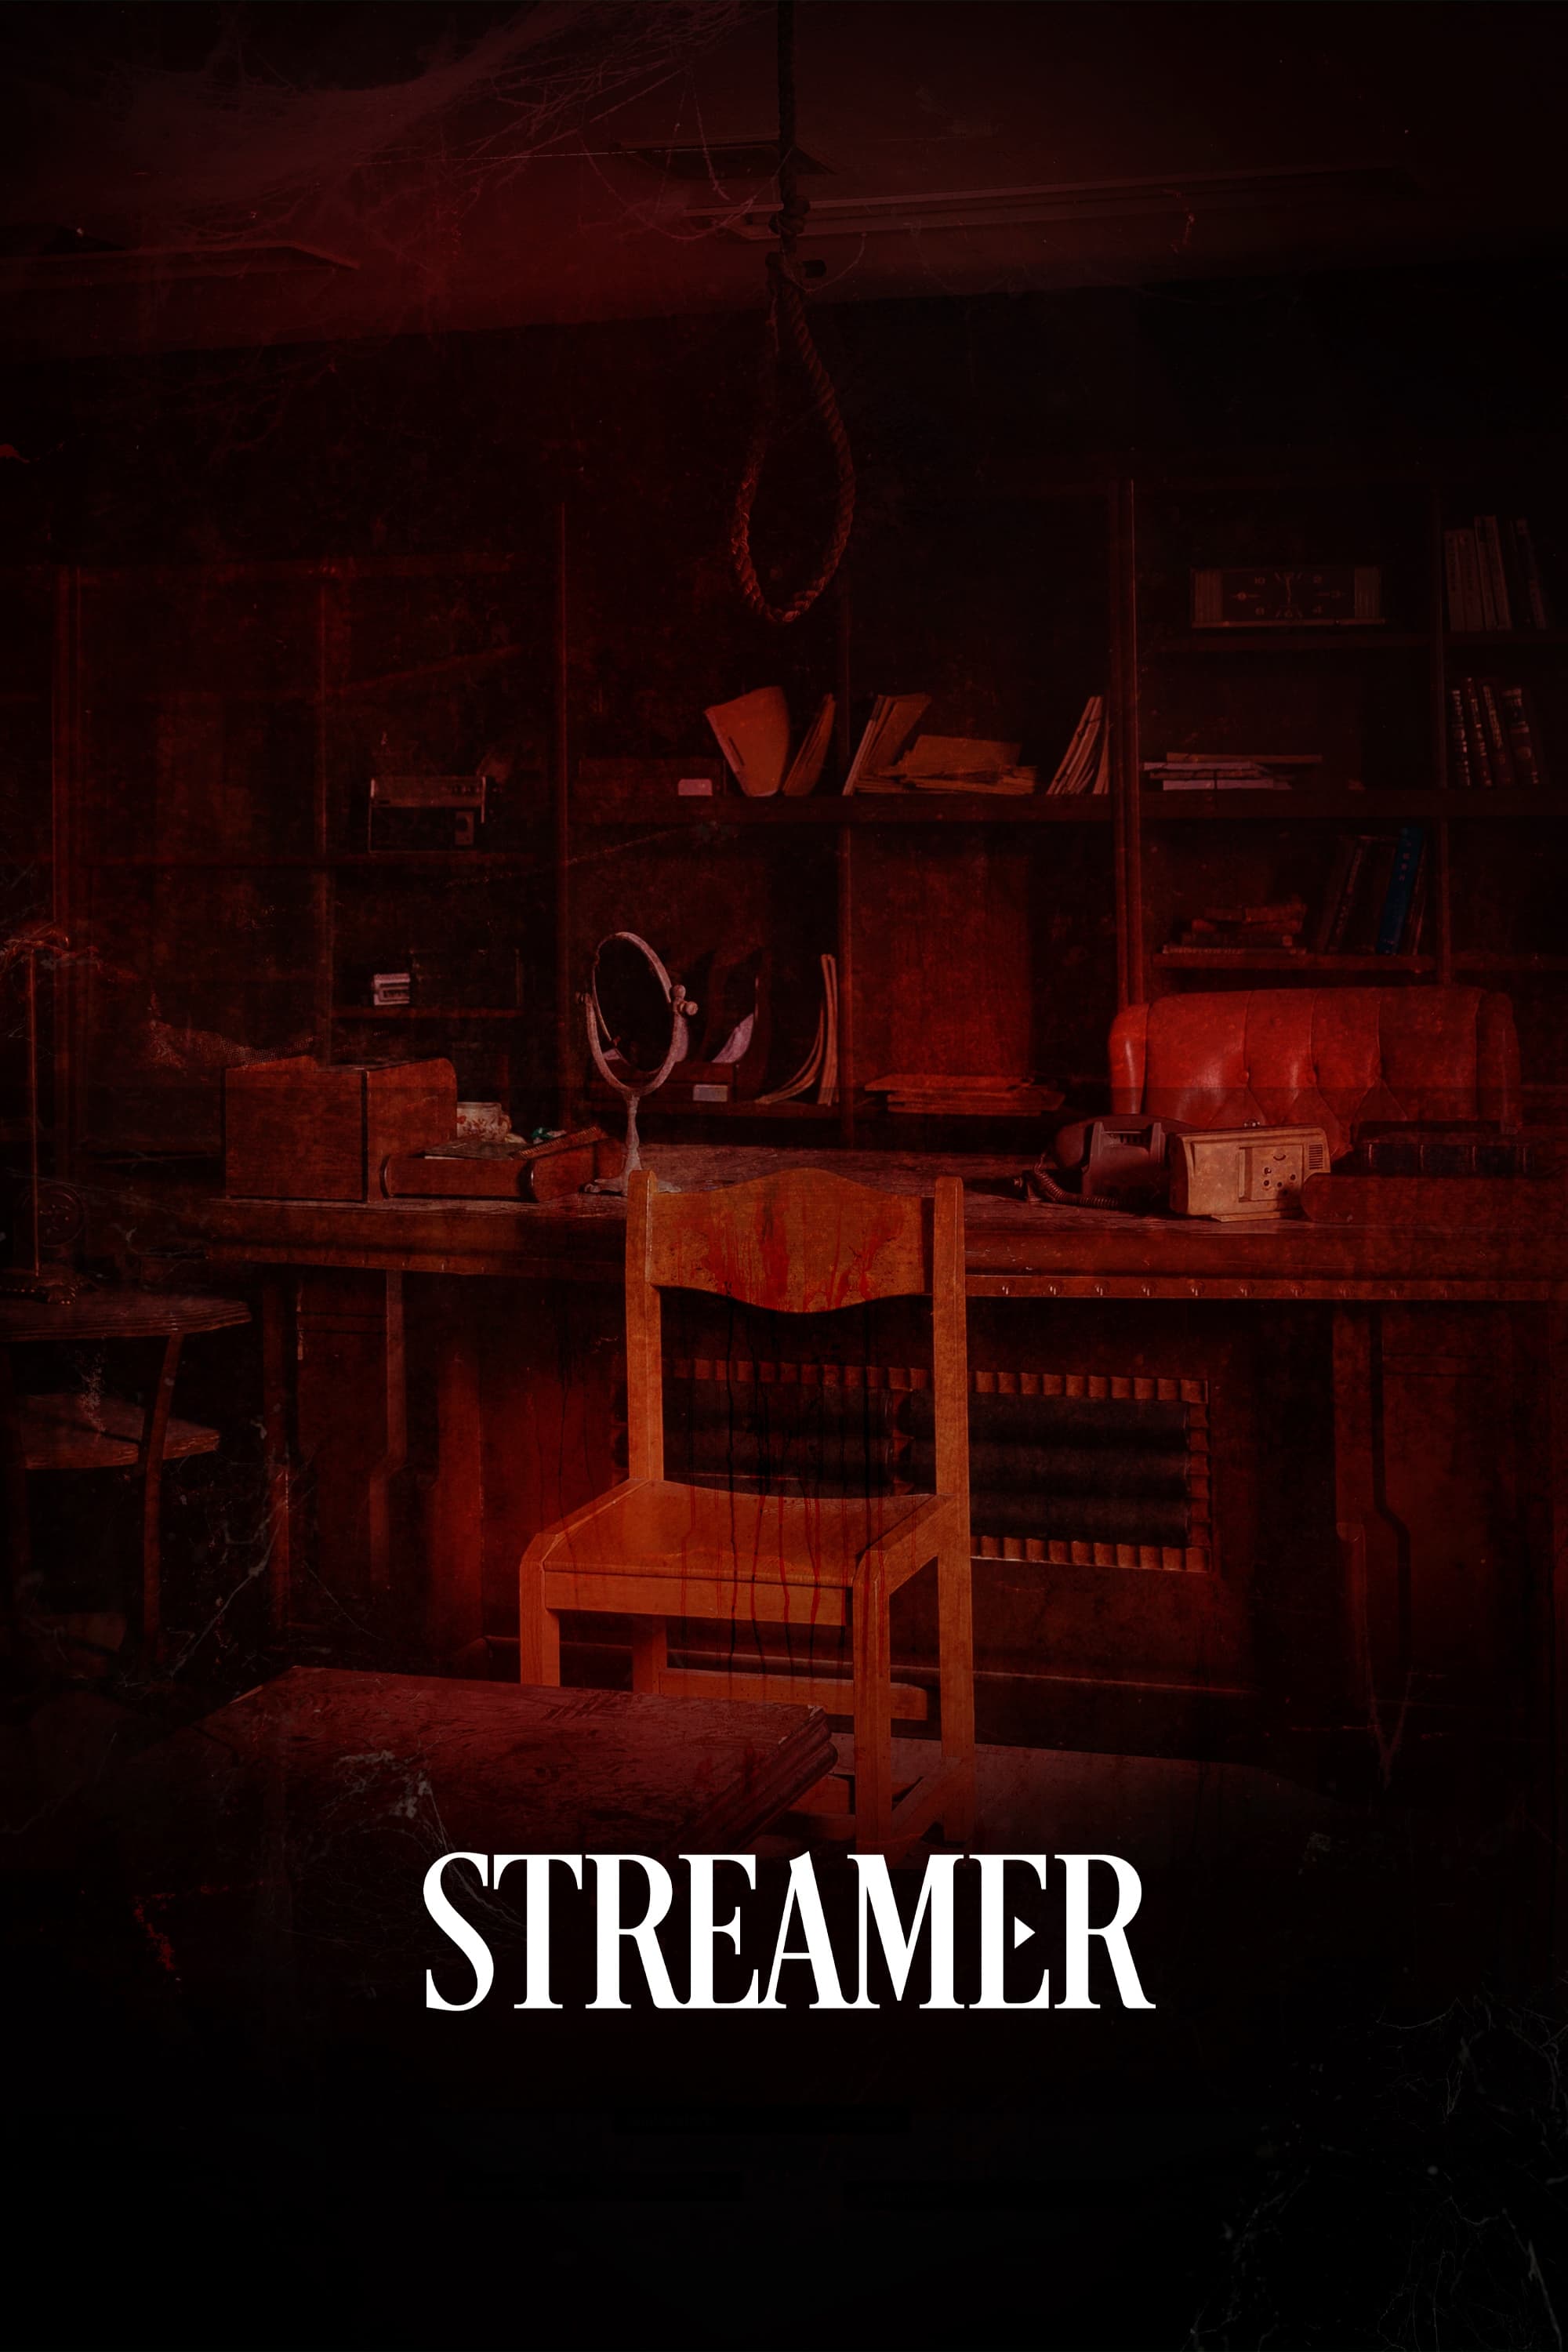 Streamer